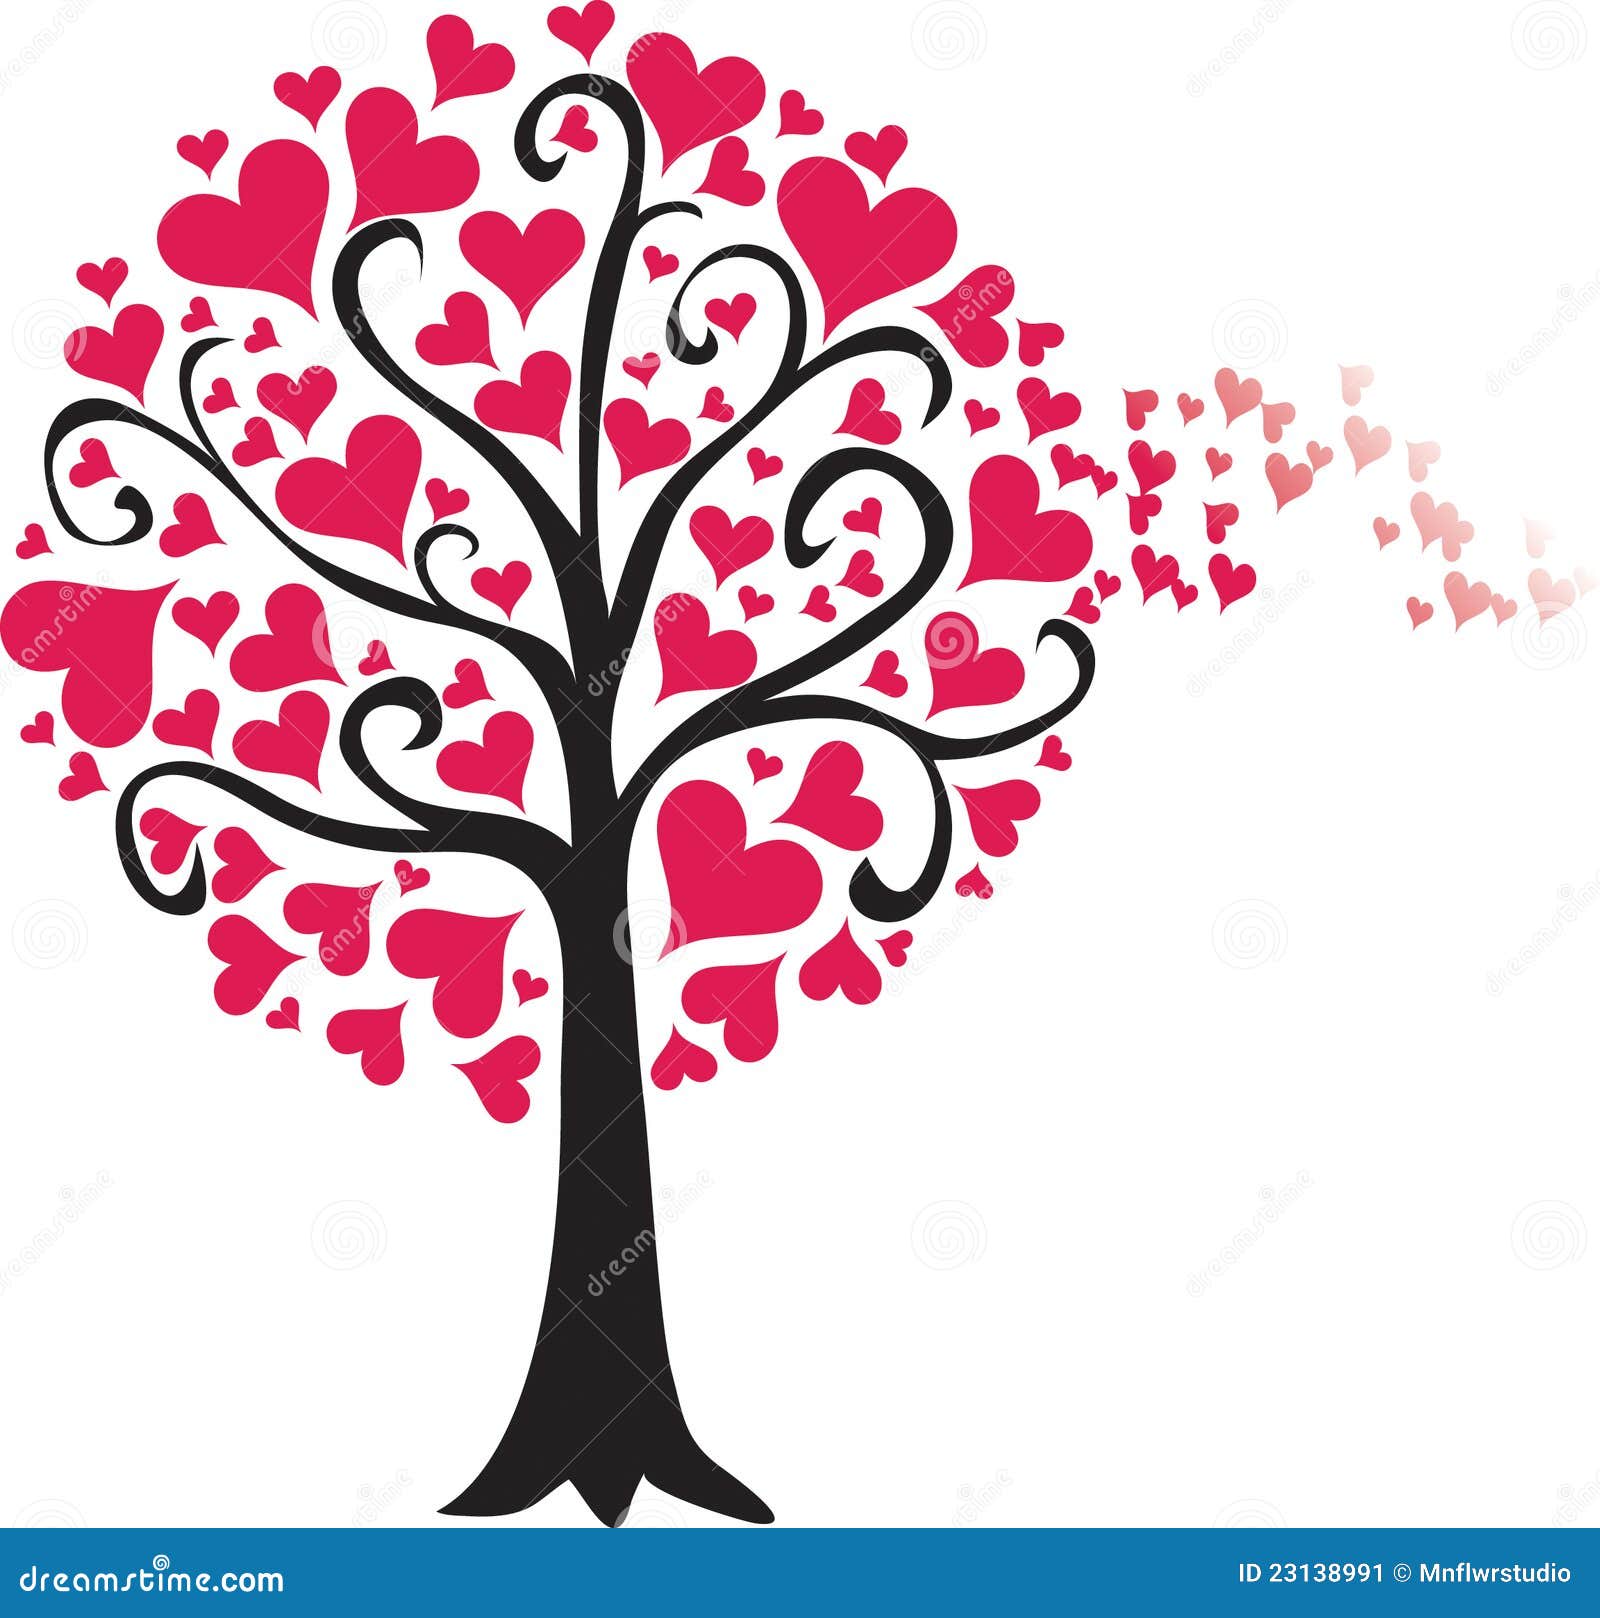 Valentine Tree Breeze Stock Image - Image: 23138991